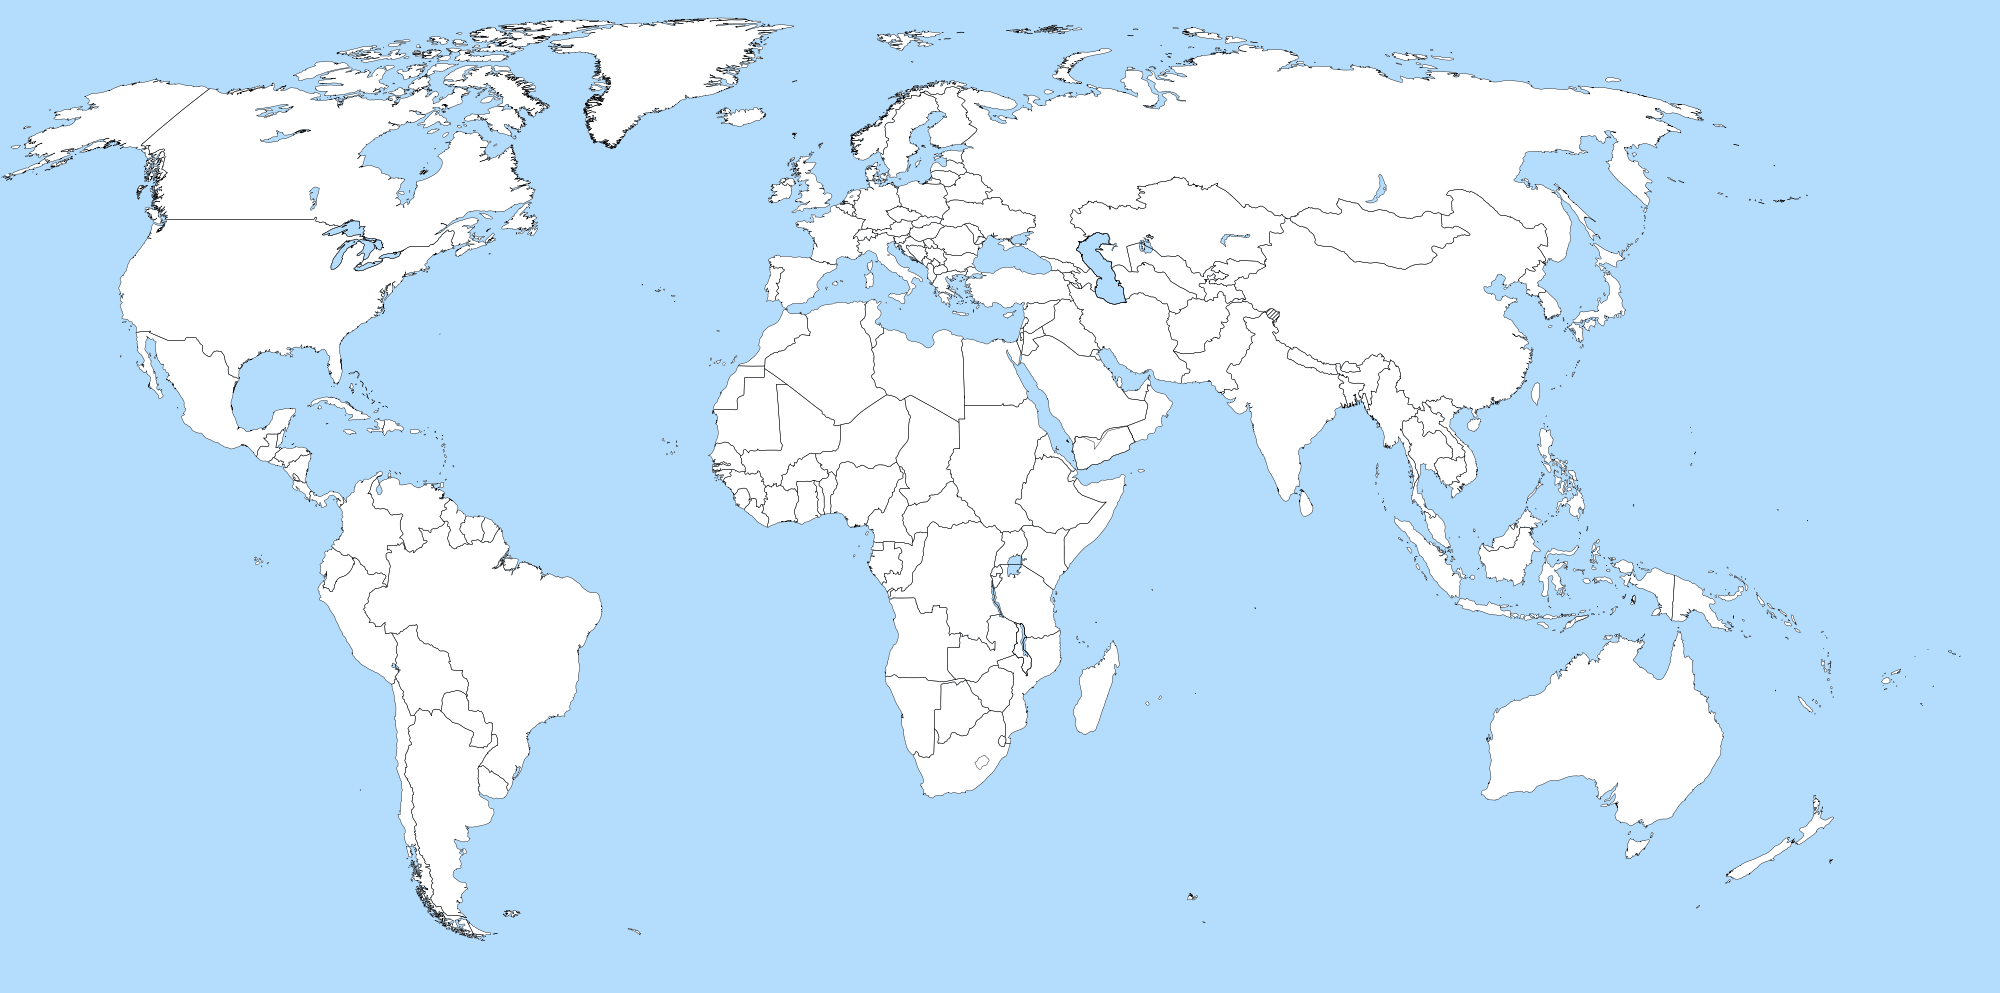 http://www.cartograf.fr/images/map/monde-pays/grande_carte_monde_vierge_decoupage_pays_fond_bleu.png